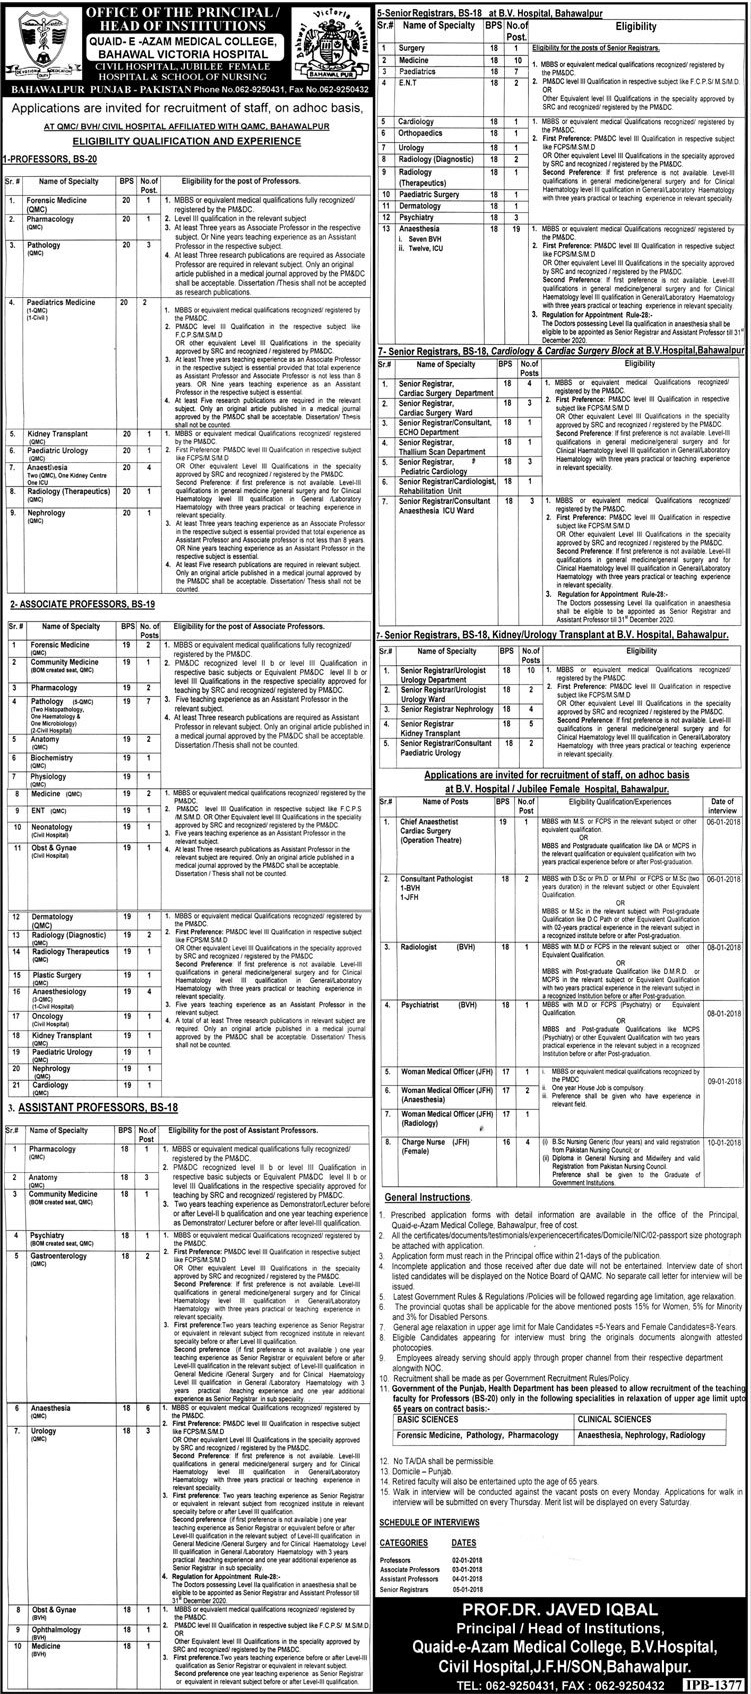 Bahawalpur Victoria Hospital 172 Jobs Jang Newspaper 05 December 2017